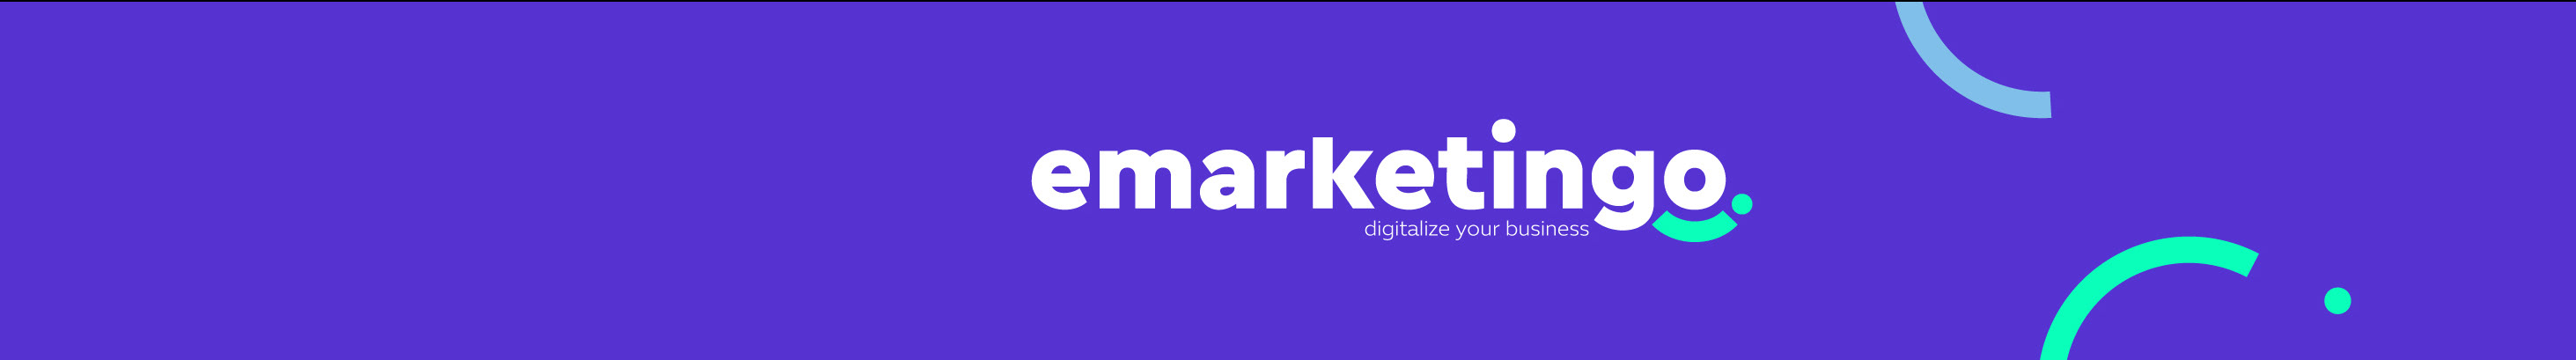 eMarketingo Web's profile banner